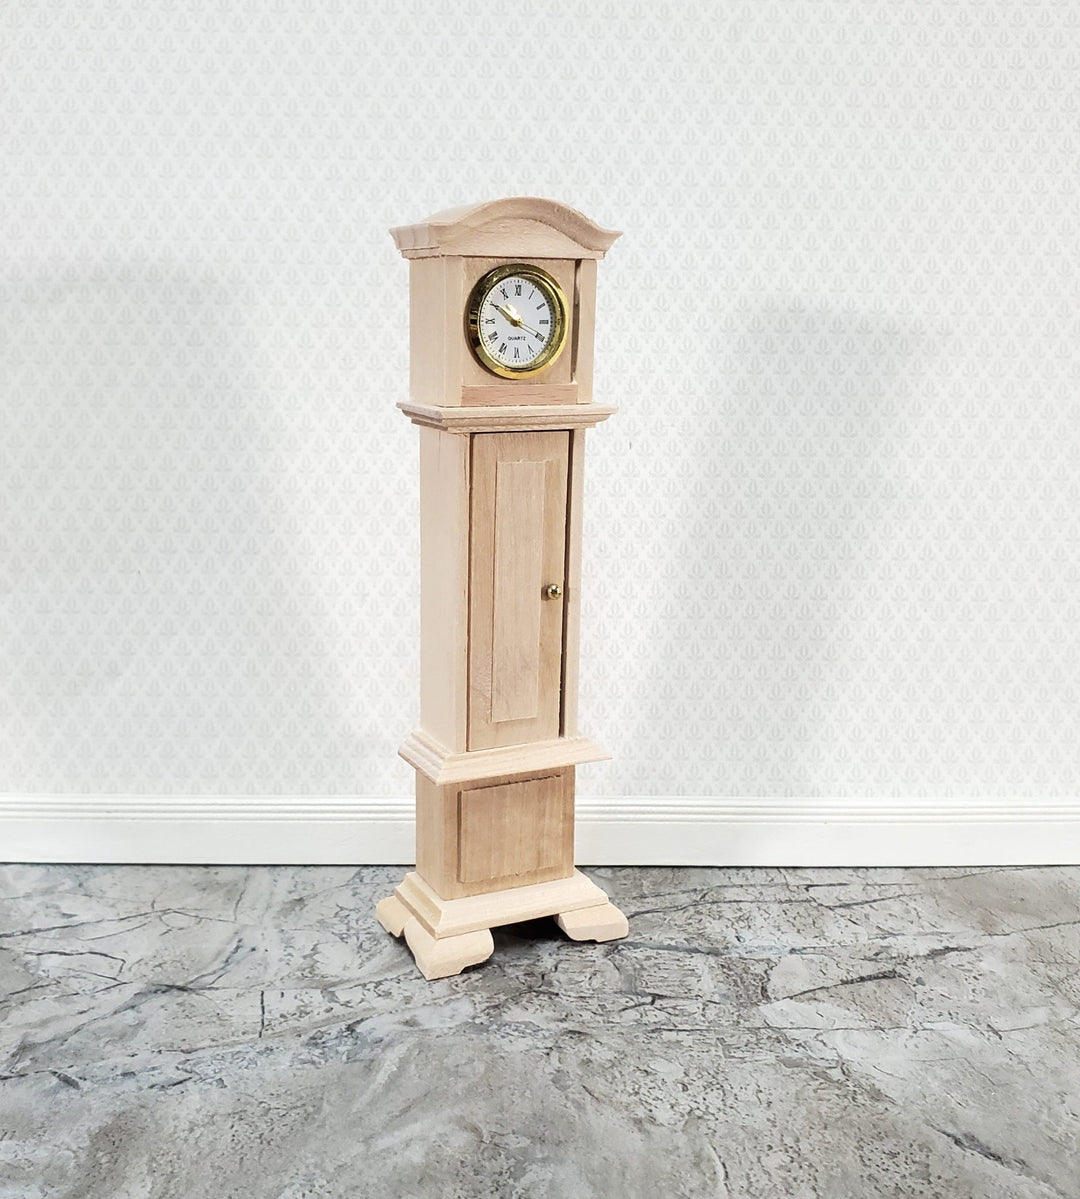 Dollhouse Working Grandfather Clock Opens Unpainted Wood 1:12 Scale Furniture - Miniature Crush